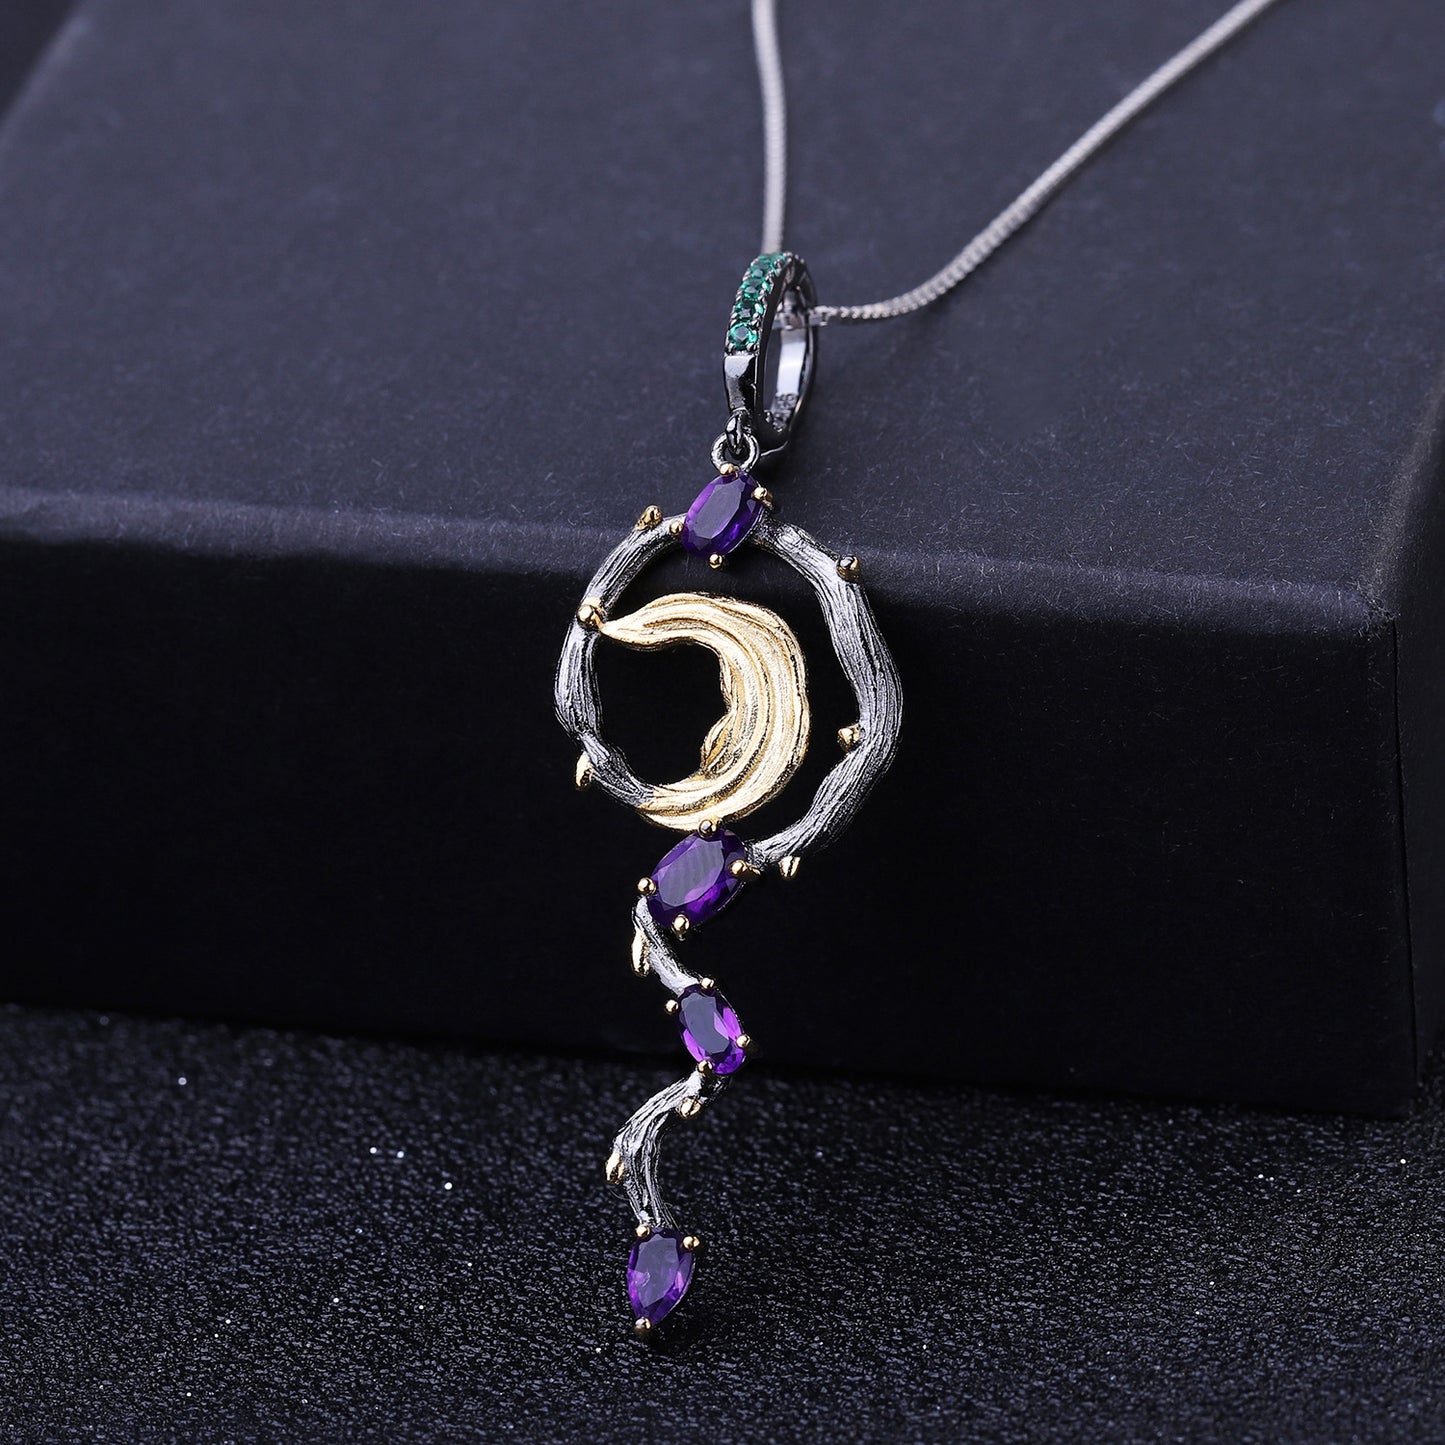 Secret Garden Premium Natural Style Design Inlaid Colourful Gemstone Pendant Sterling Silver Necklace for Women